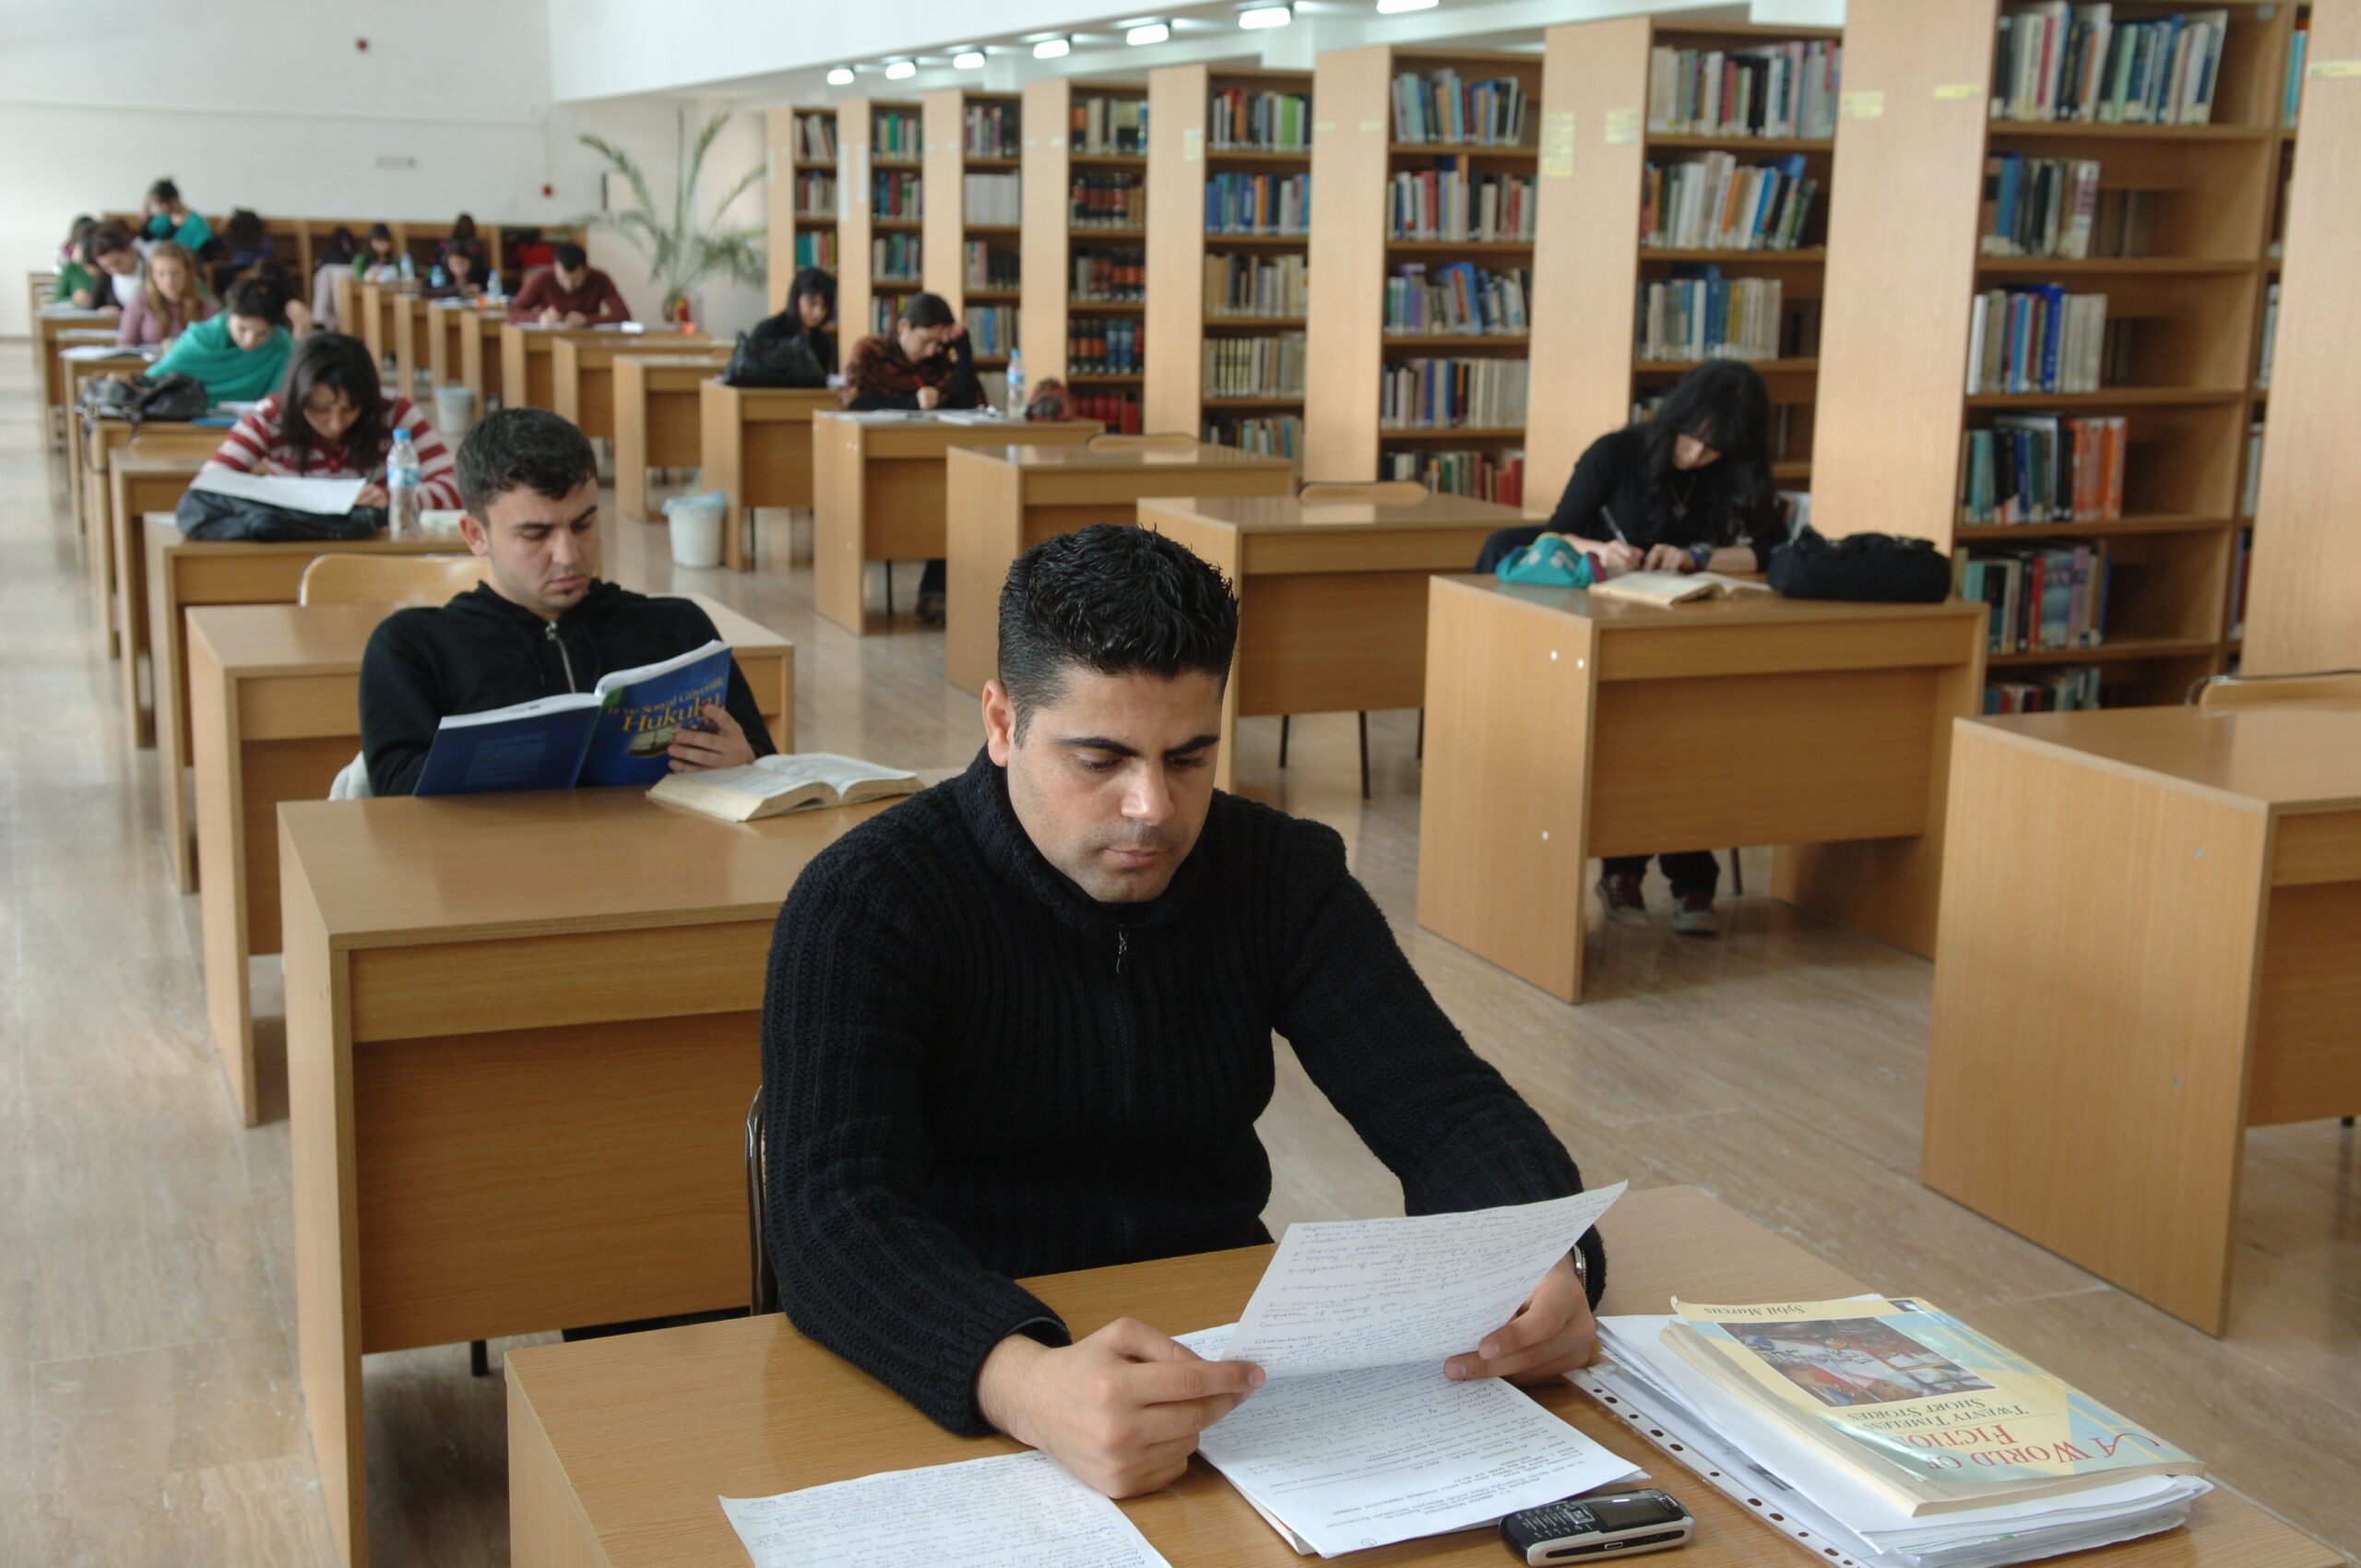 anadolu universitesi find and study 38 scaled - Anadolu University